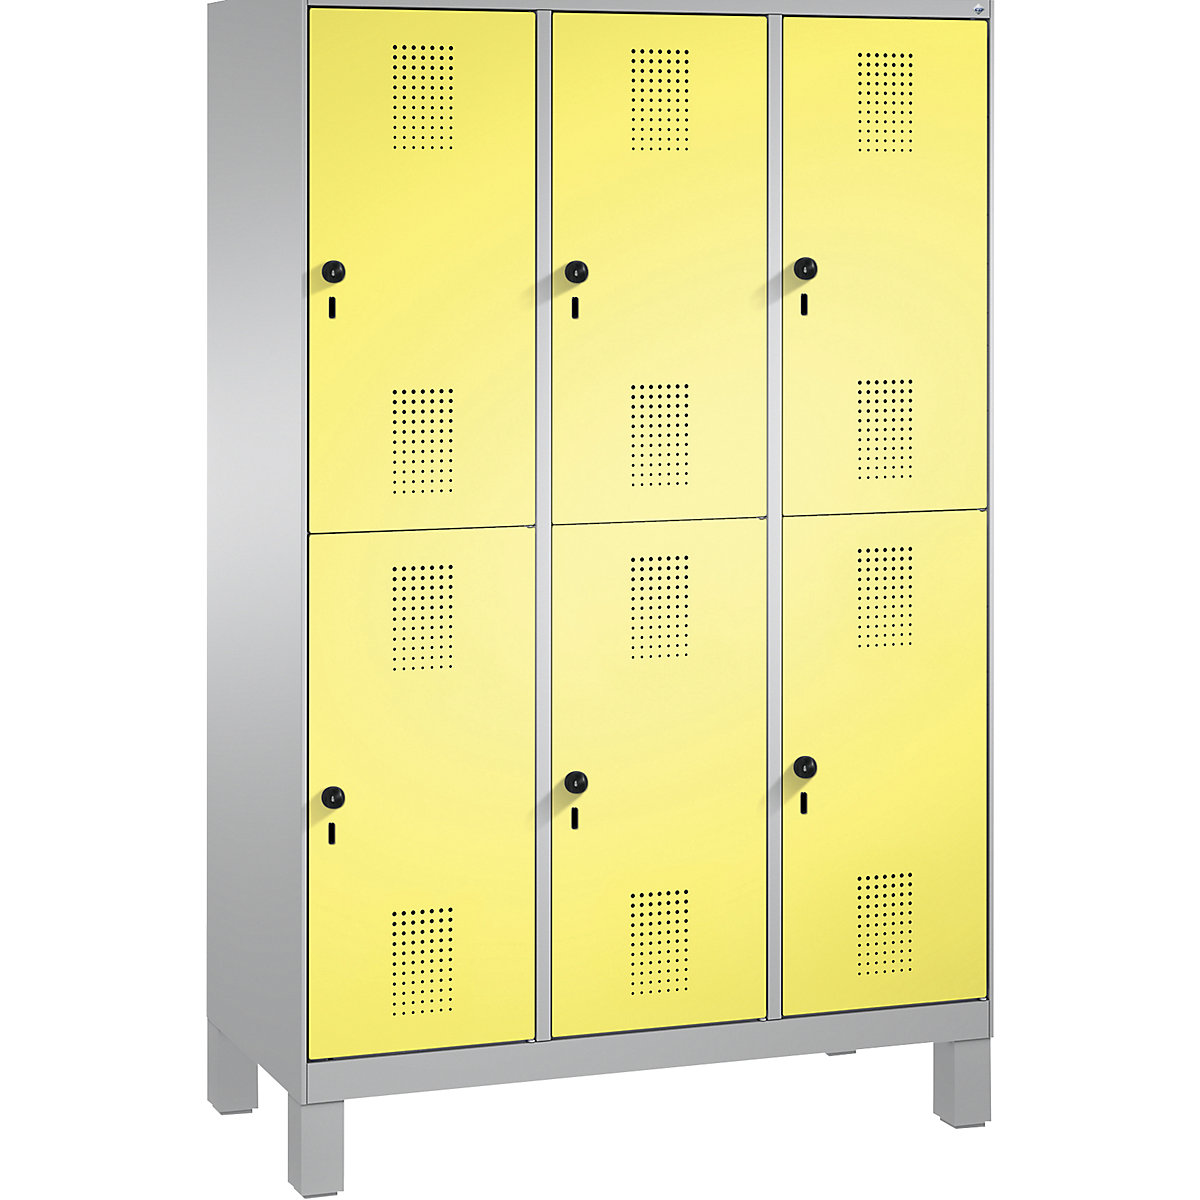 EVOLO cloakroom locker, double tier, with feet – C+P